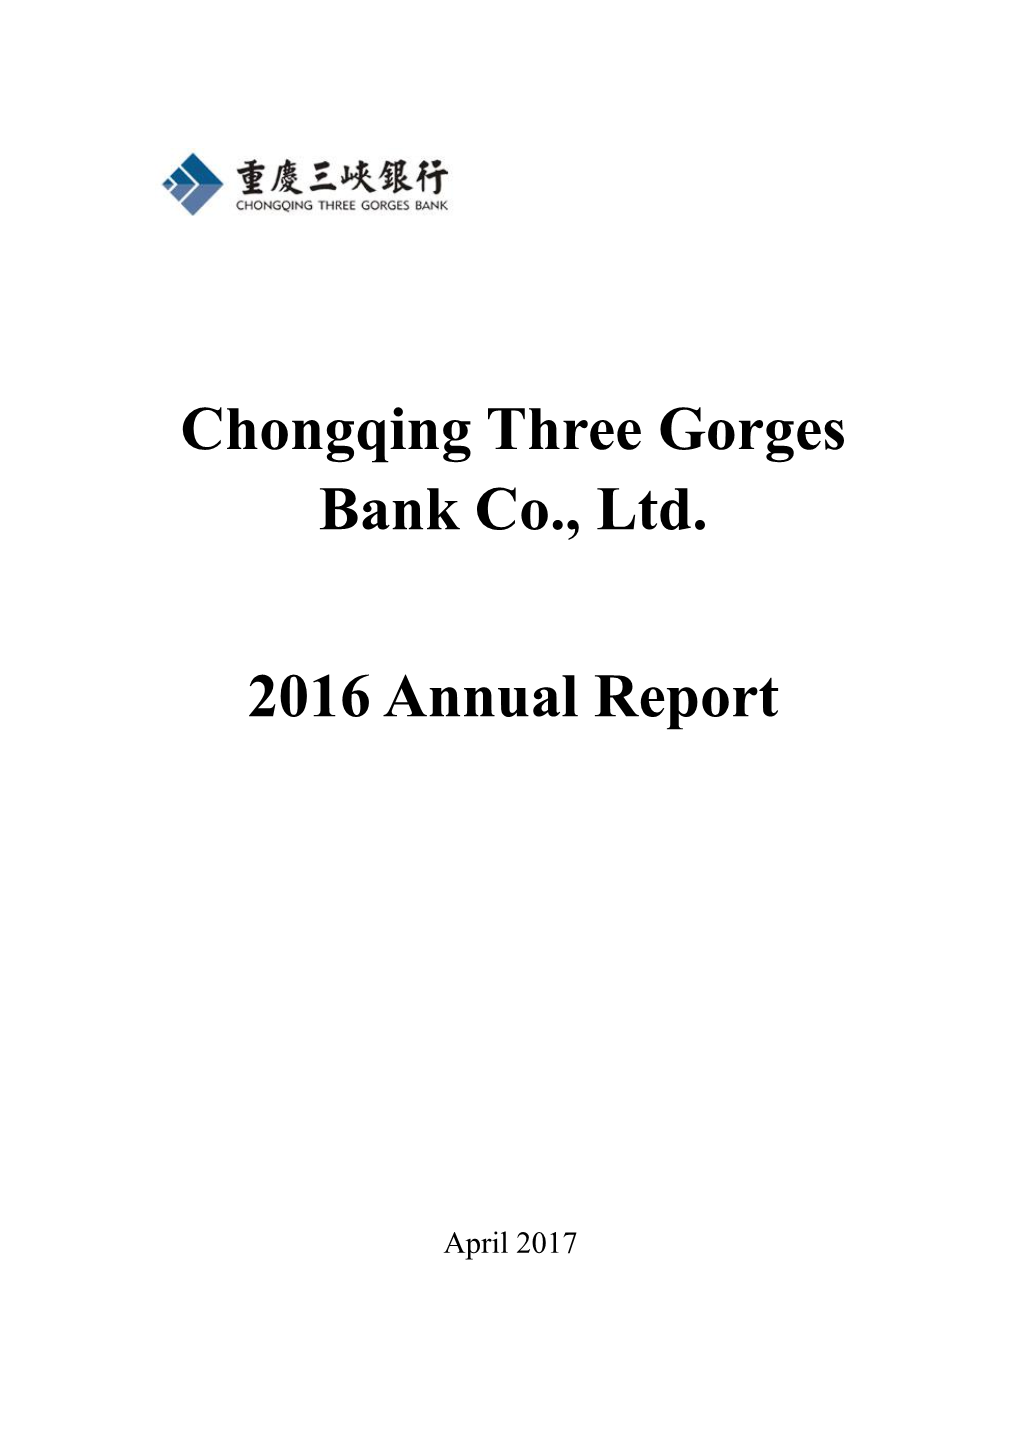 Chongqing Three Gorges Bank Co., Ltd. 2016 Annual Report